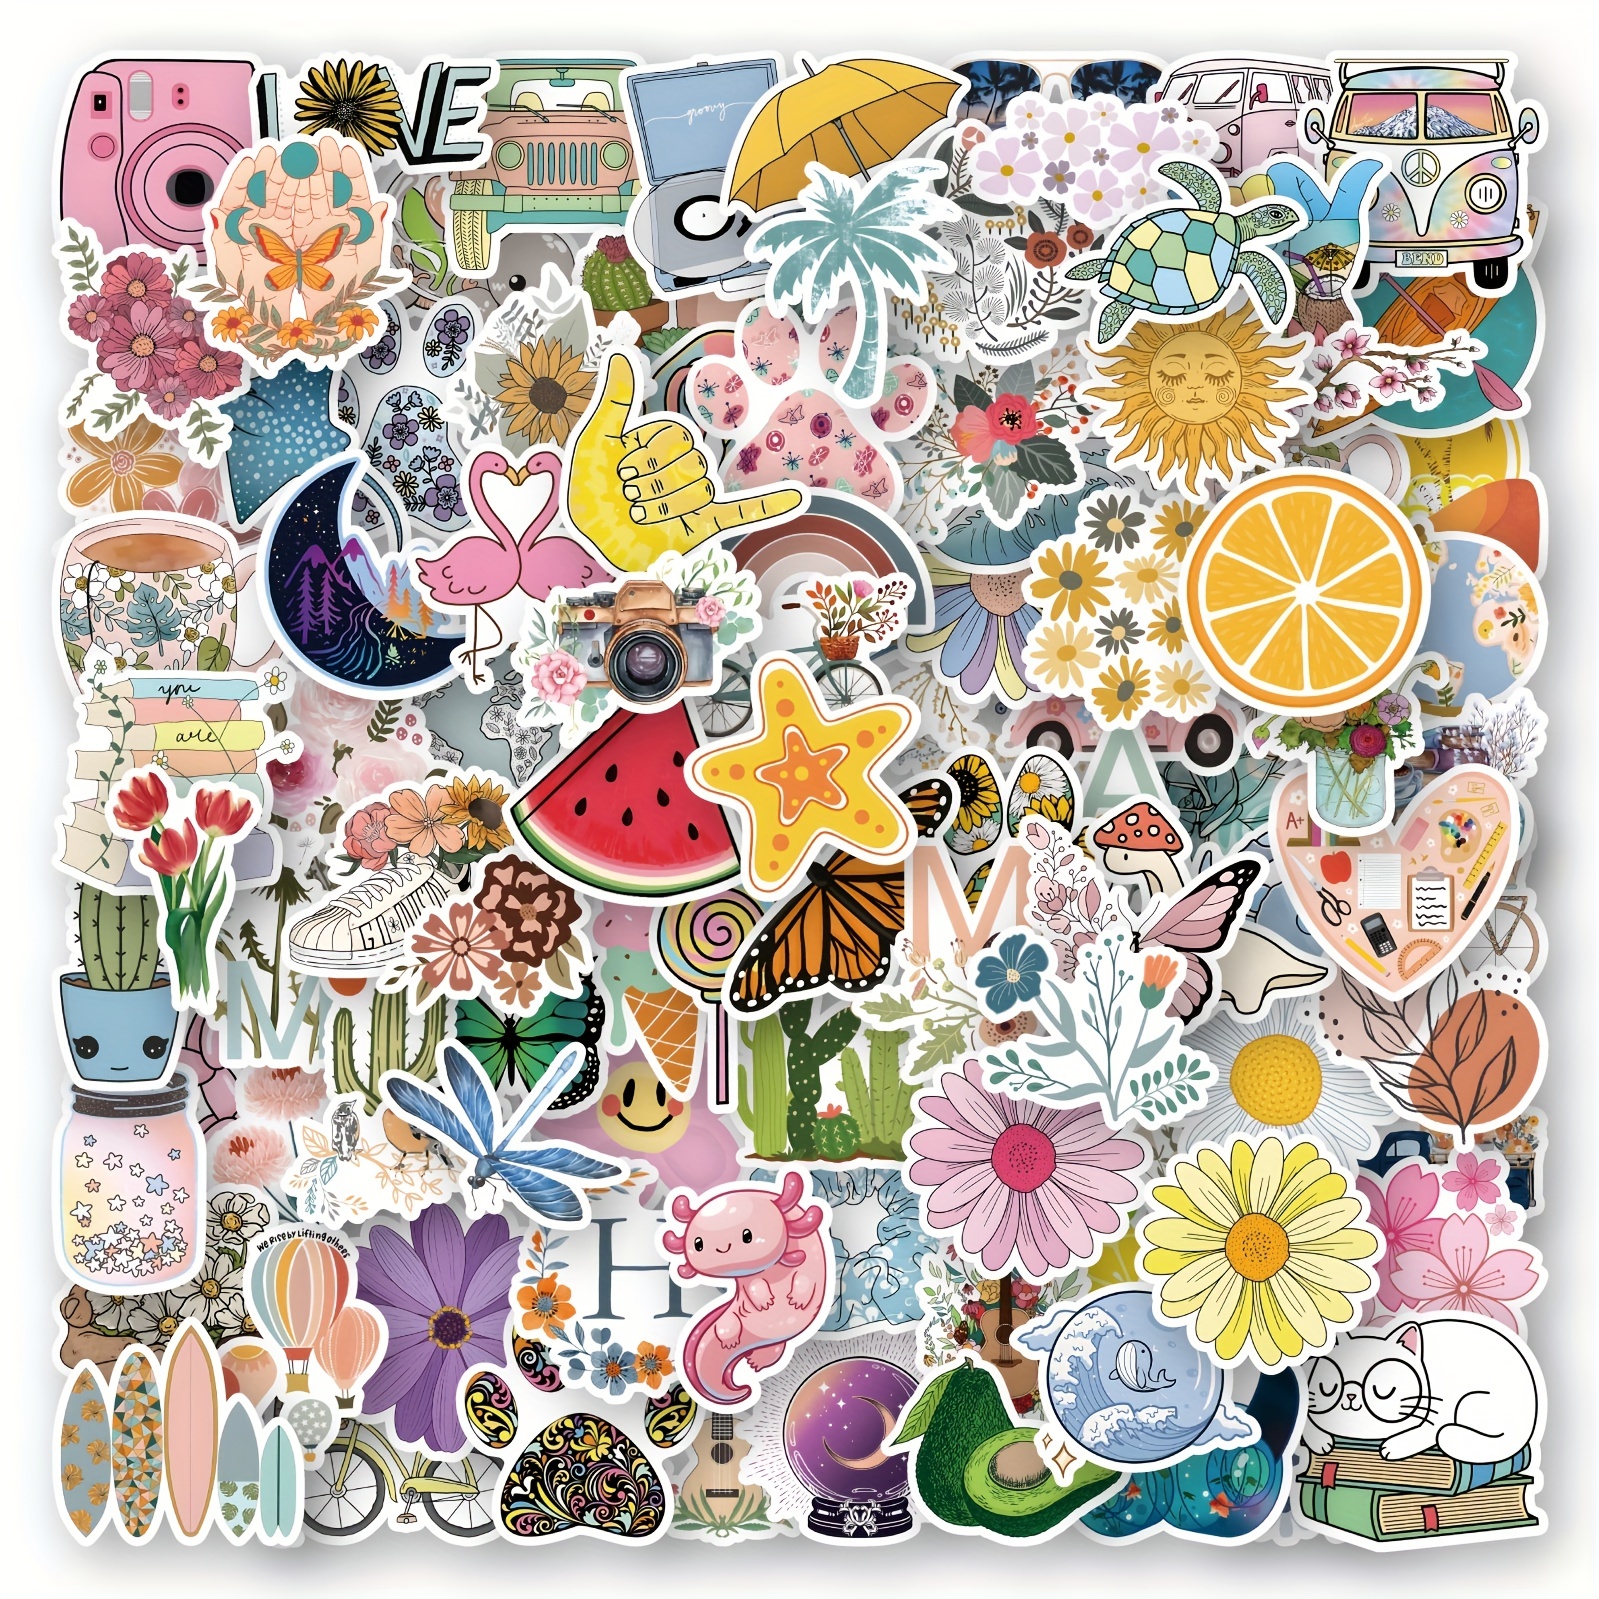 50PCS Kawaii Stickers Cute Stuff Anime Animal Aesthetic Vsco Japanese Meme  Decal for Laptop Water Bottle Room Dorm Decor Accessories Journal